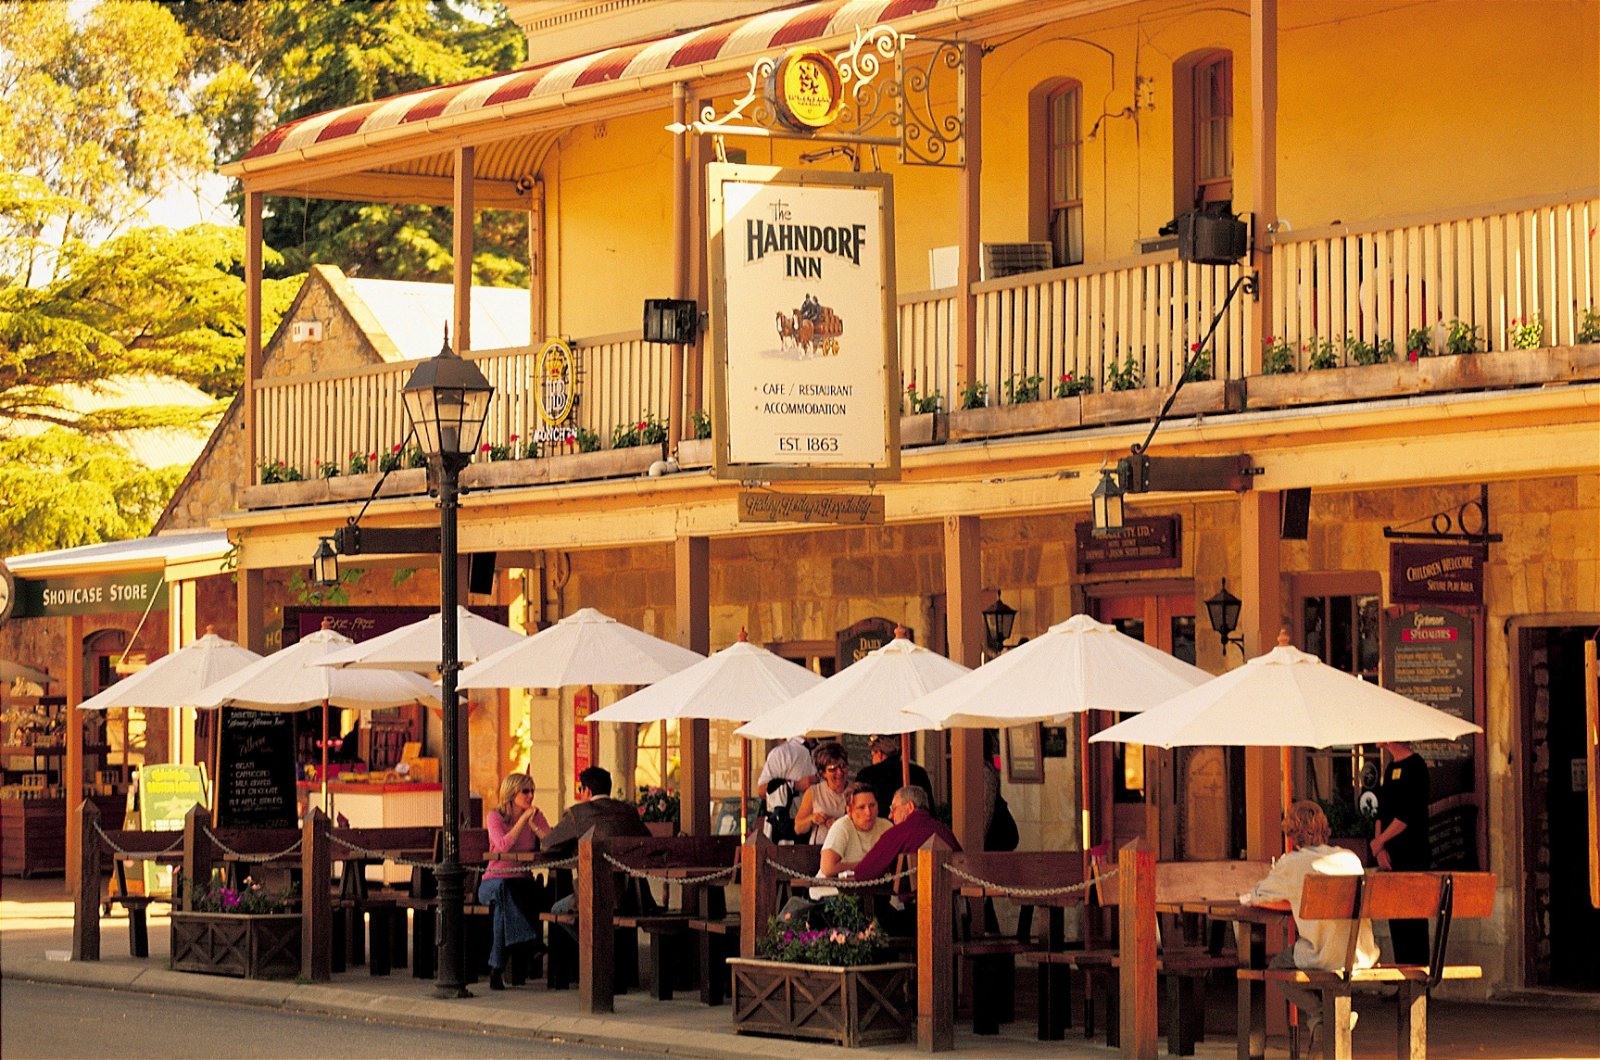 Hahndorf Inn Restaurant - Tourism Gold Coast